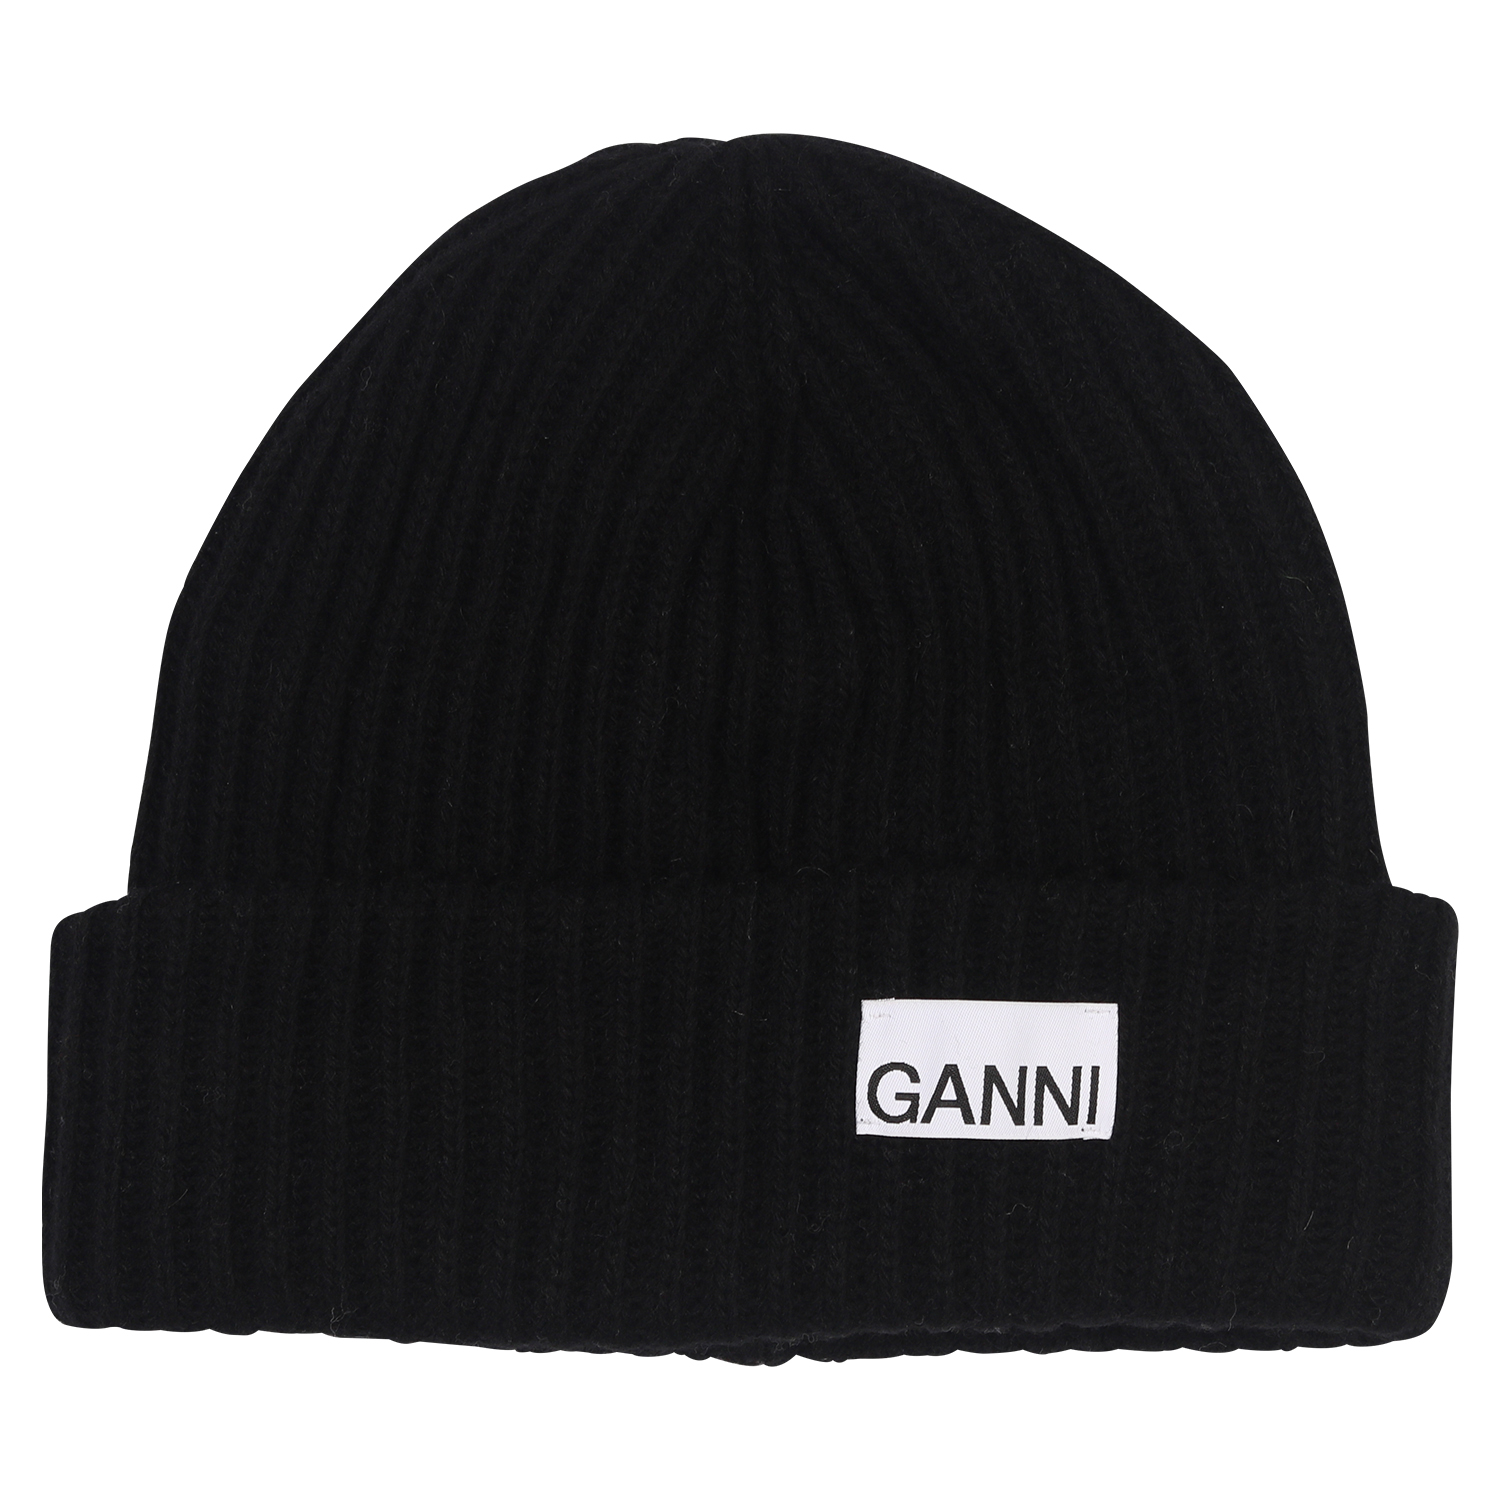 Ganni Recycled Wool Knit Beanie in Black